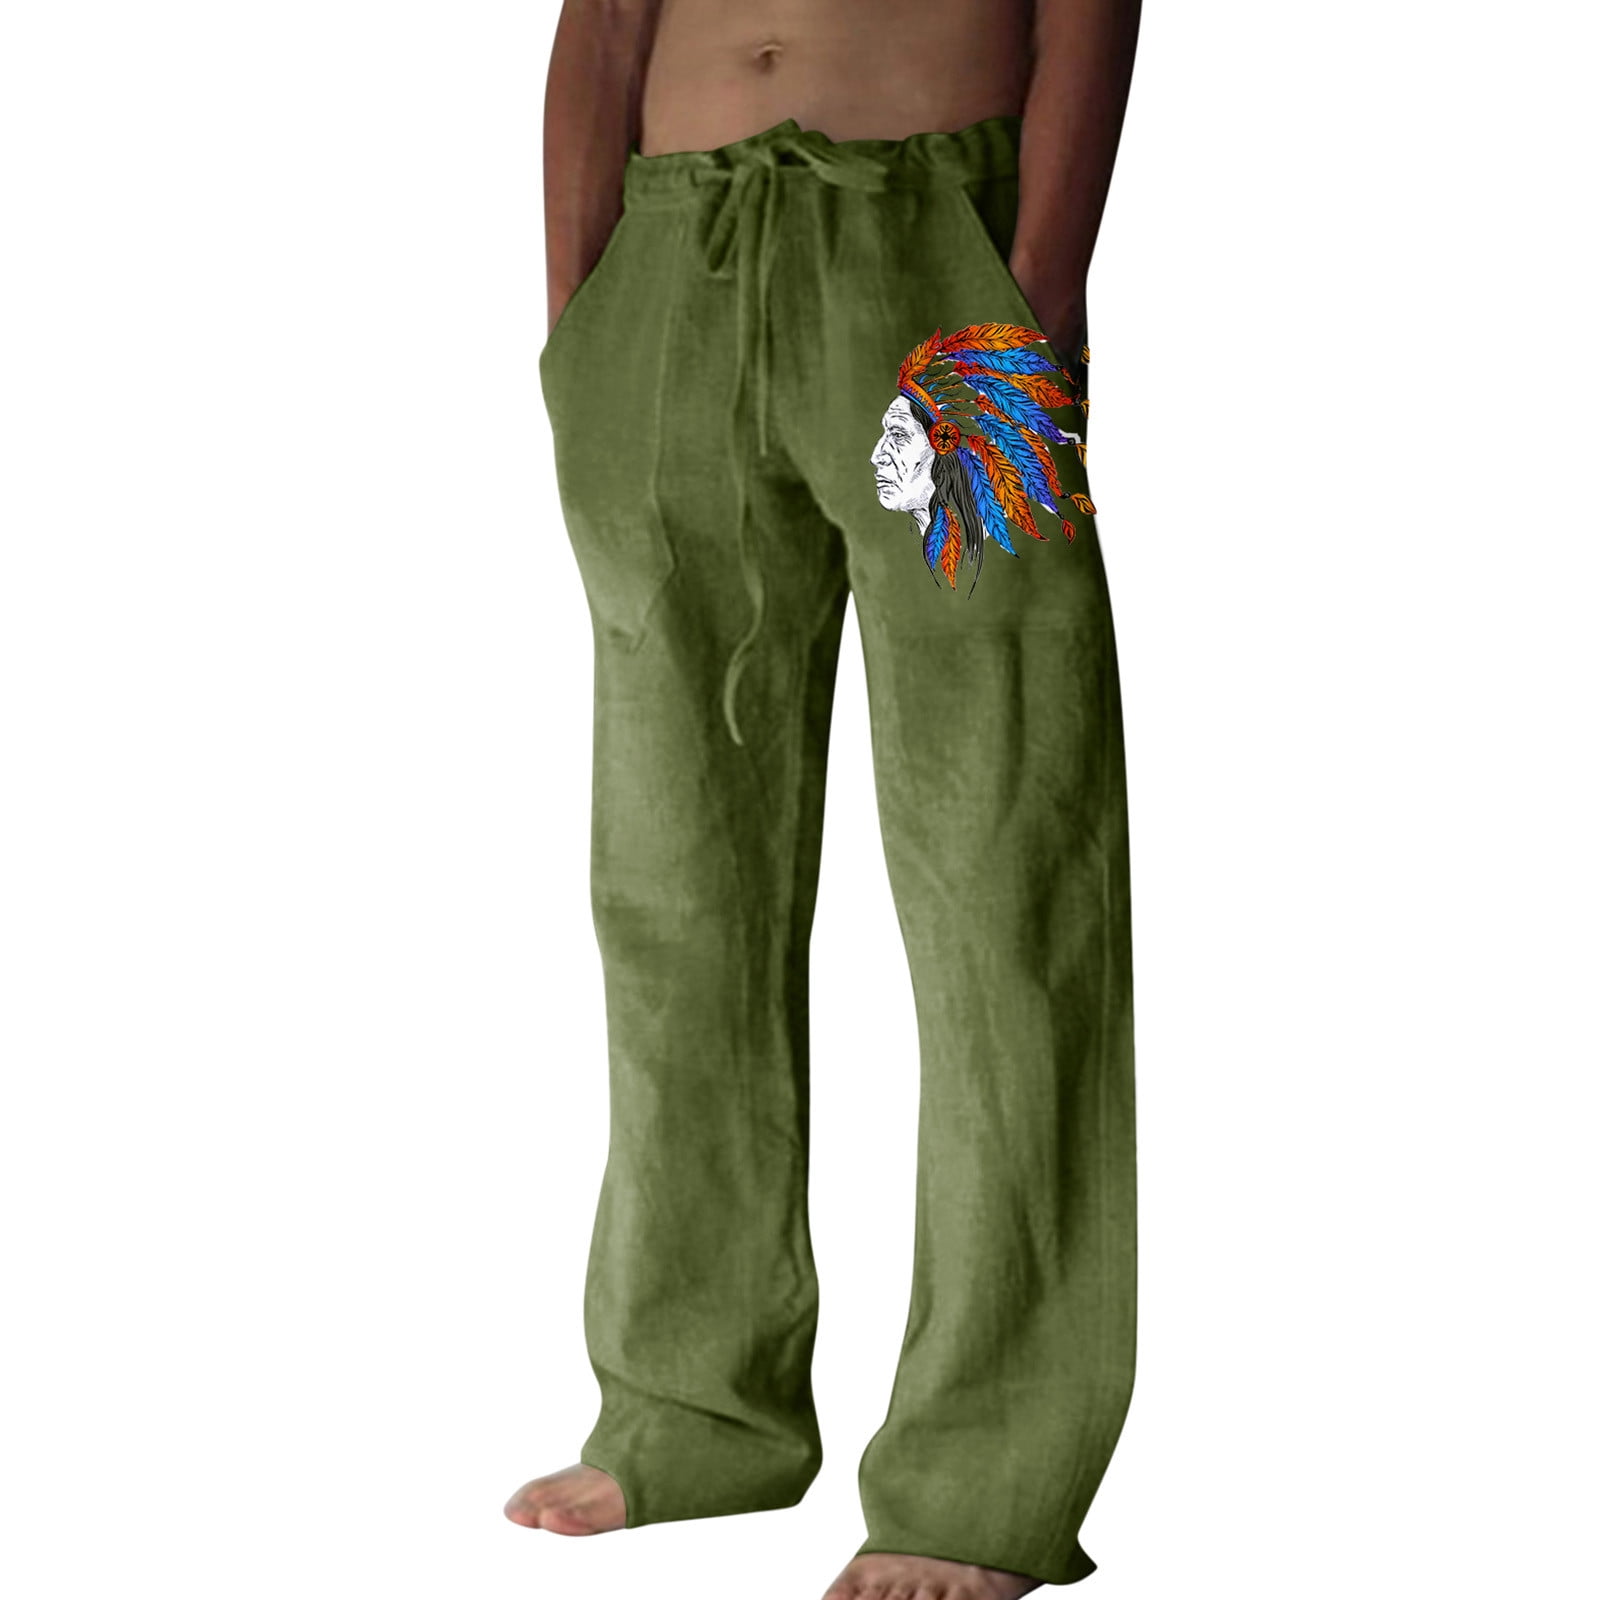 AdBFJAF Men's Pants Elastic Waistband 46 Mens Fashion Casual Cotton and ...